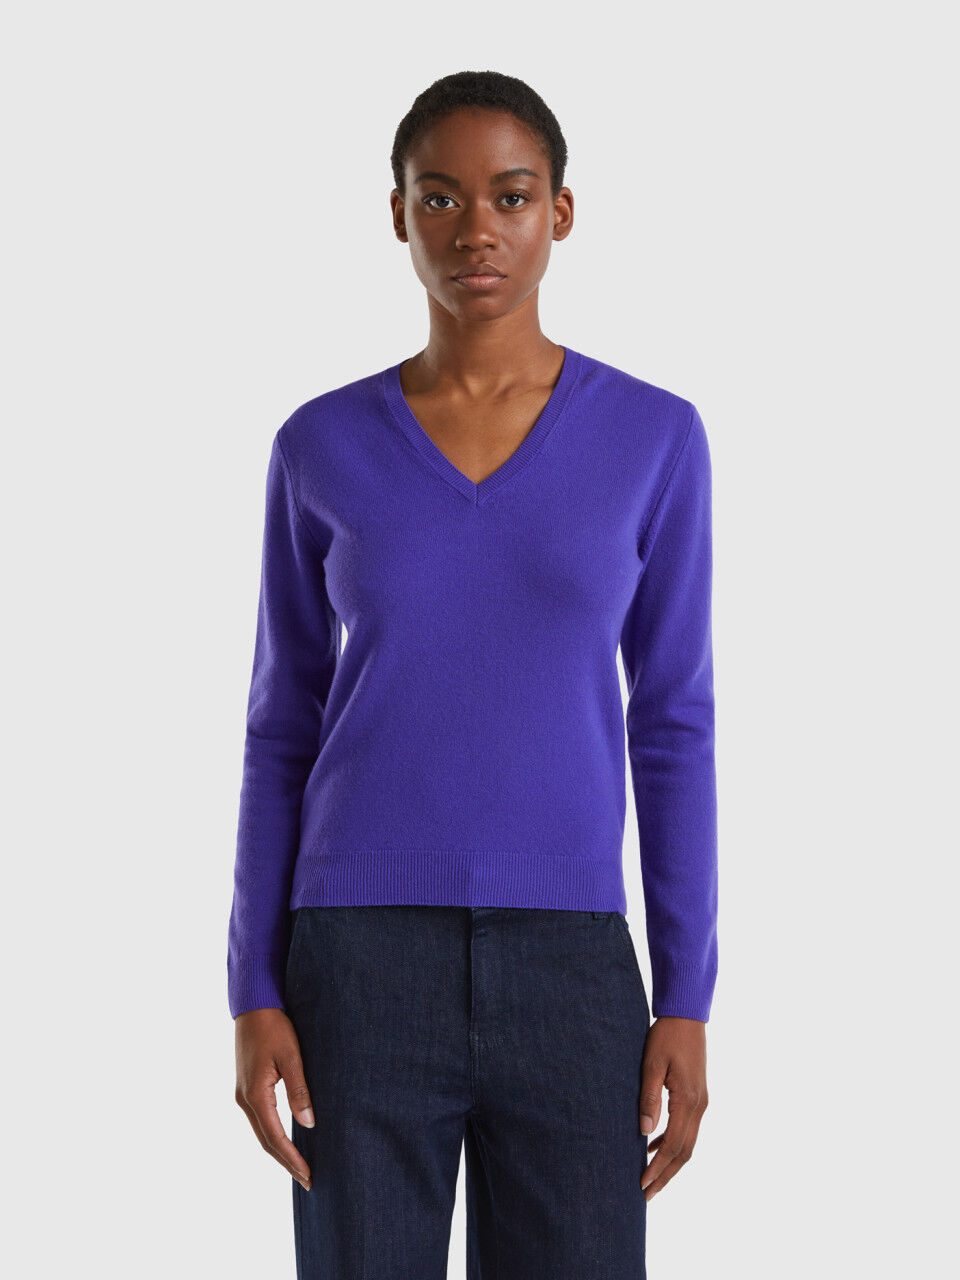 Deep blue V-neck sweater in pure Merino wool